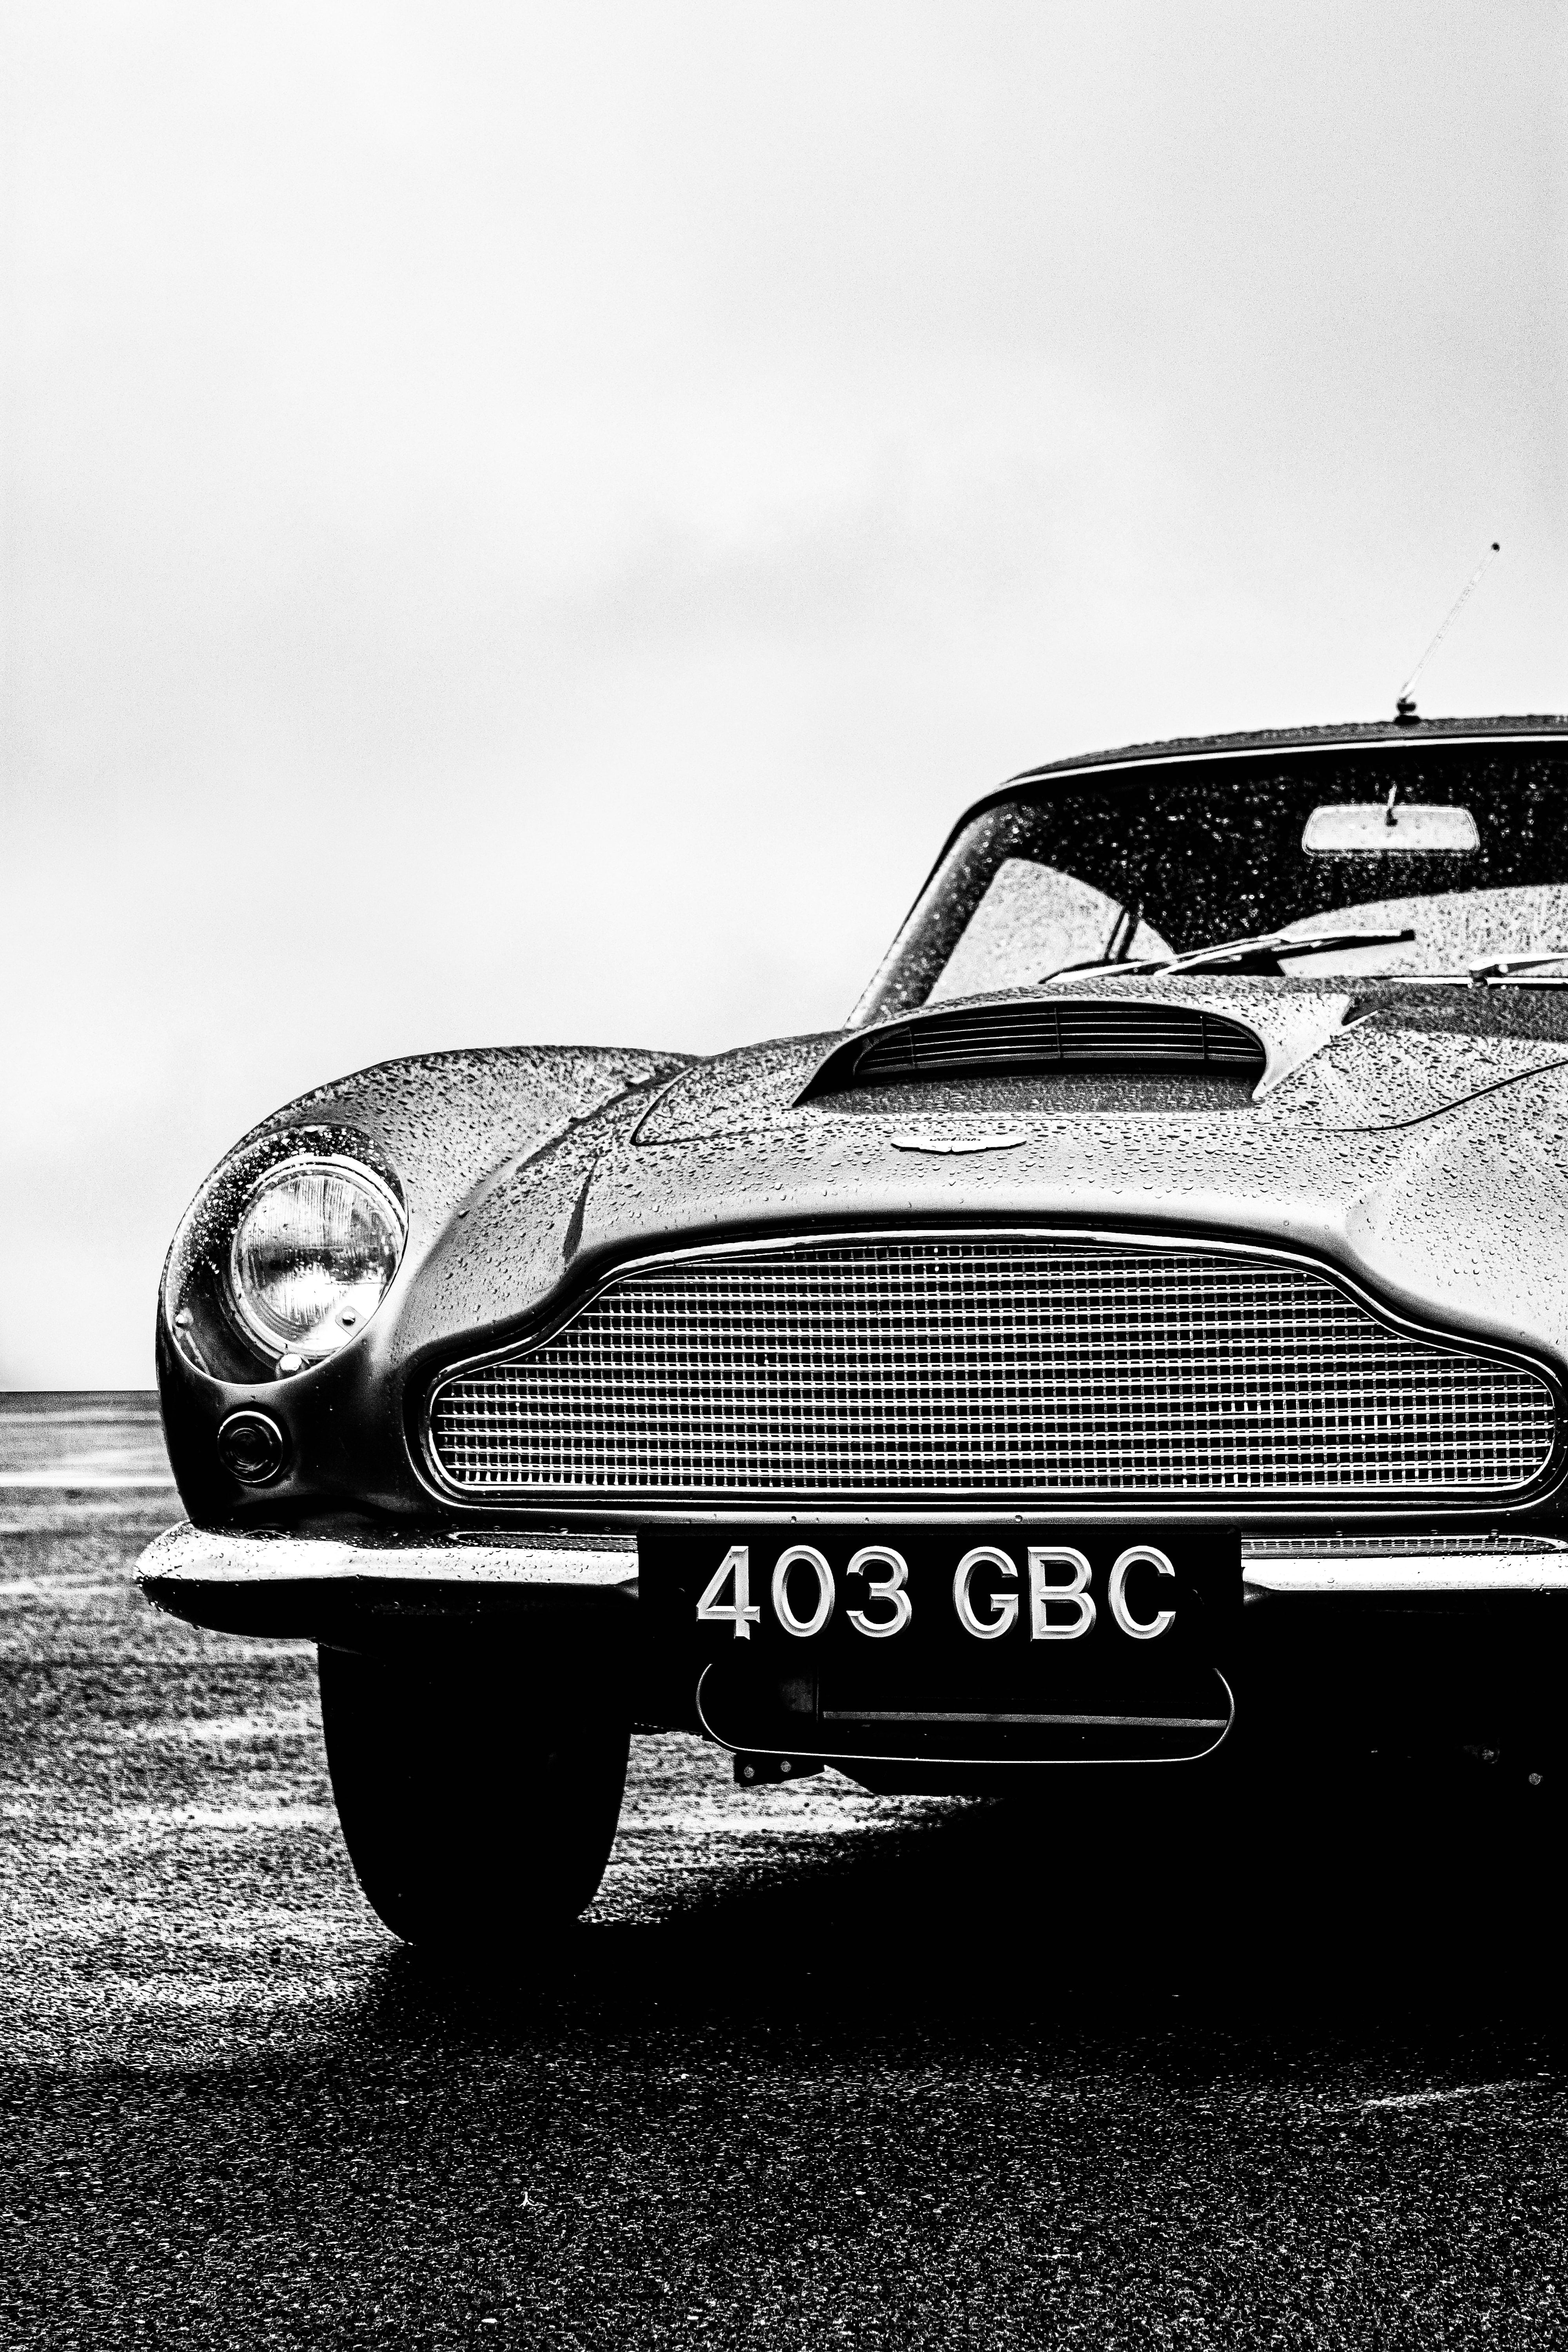 Aston Martin DB5, monochrome, photography